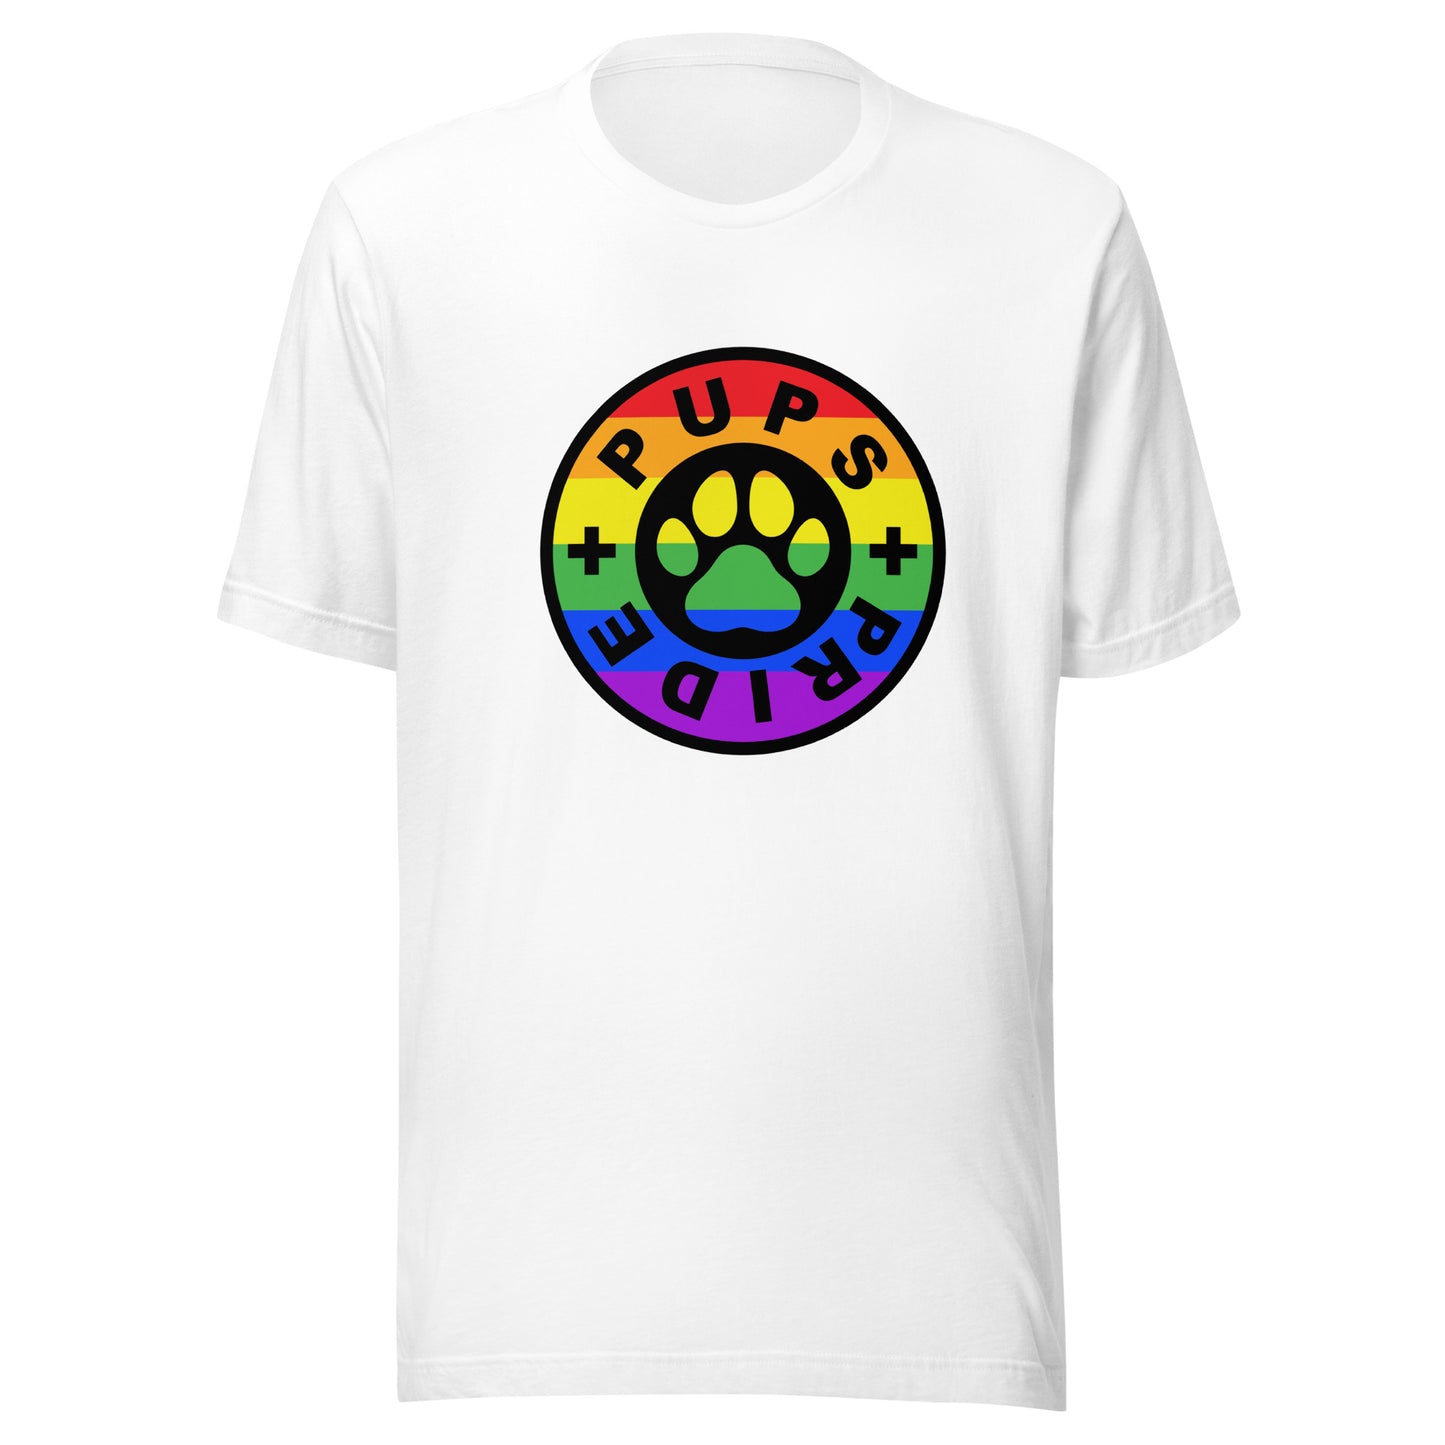 Pups and Pride t-shirt